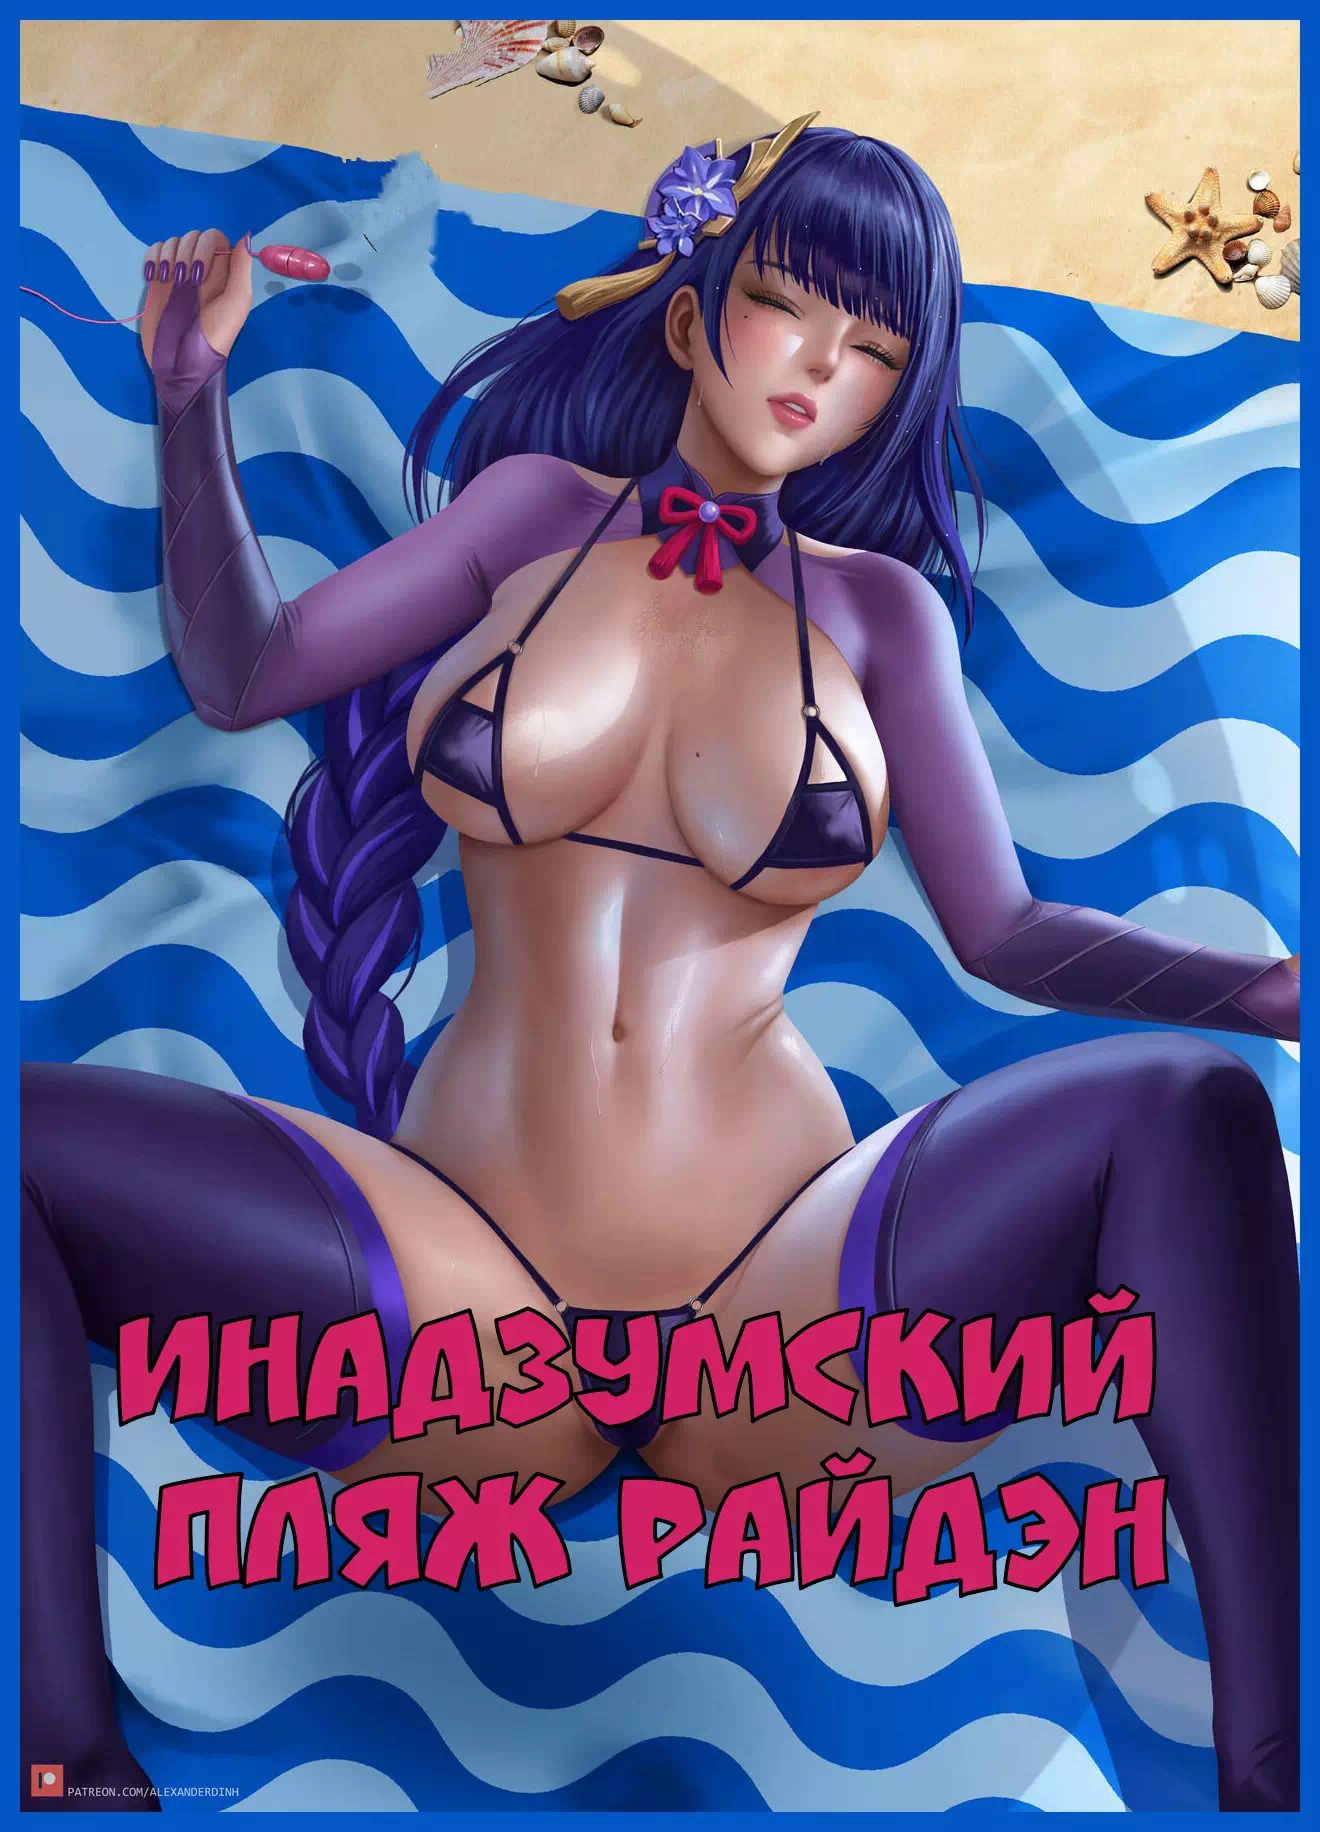 Хентай порно комиксы Genshin Impact – Инадзумский пляж Сёгун Райдэн